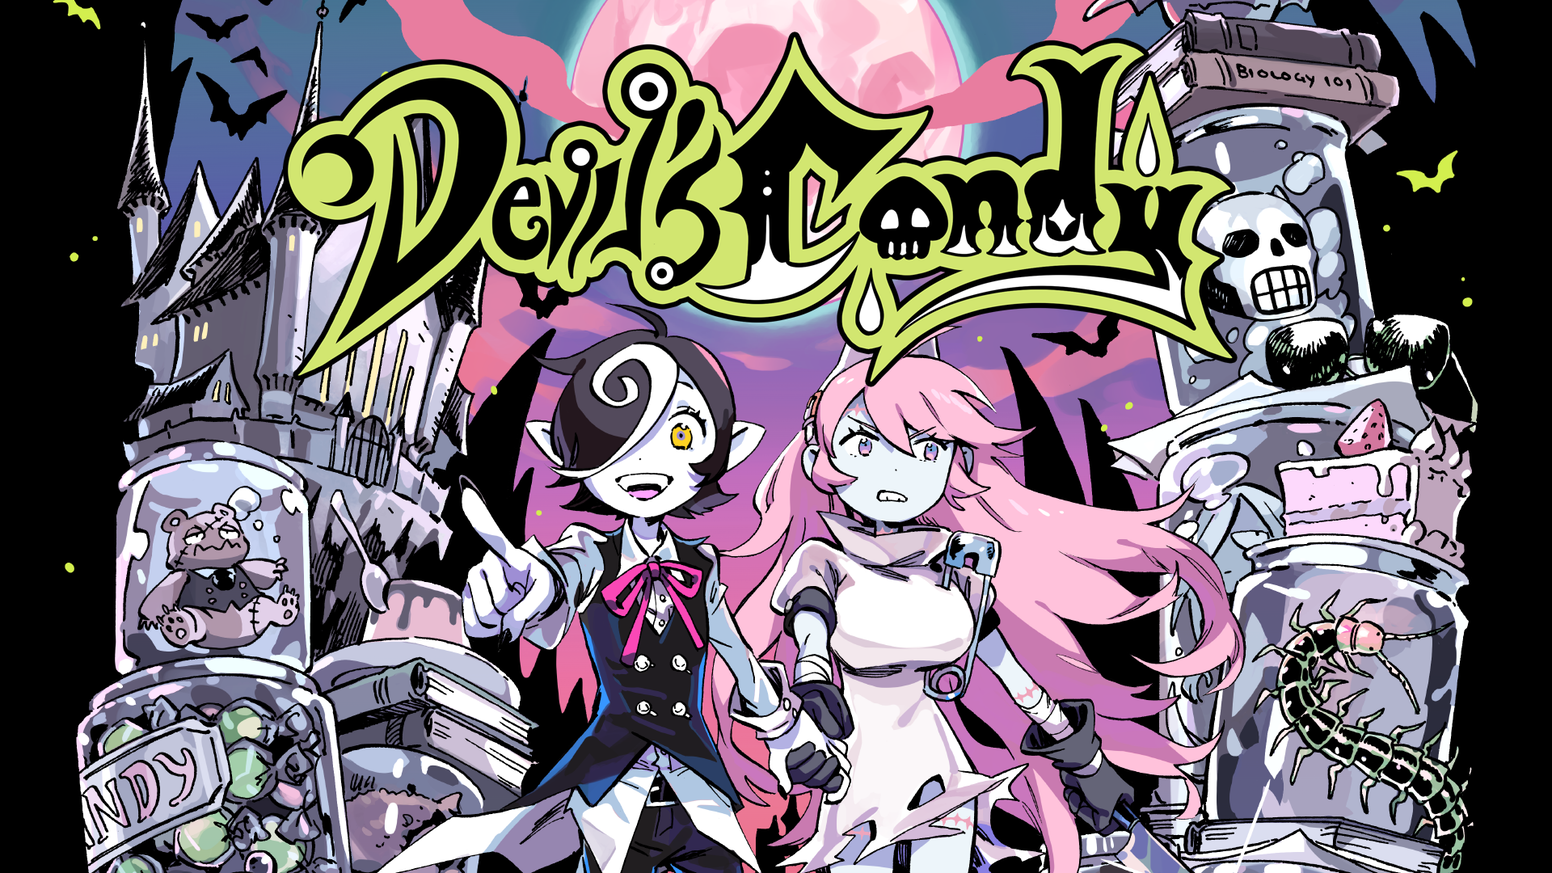 Comic Strip Review Devil S Candy Volume 1 Skjam Reviews